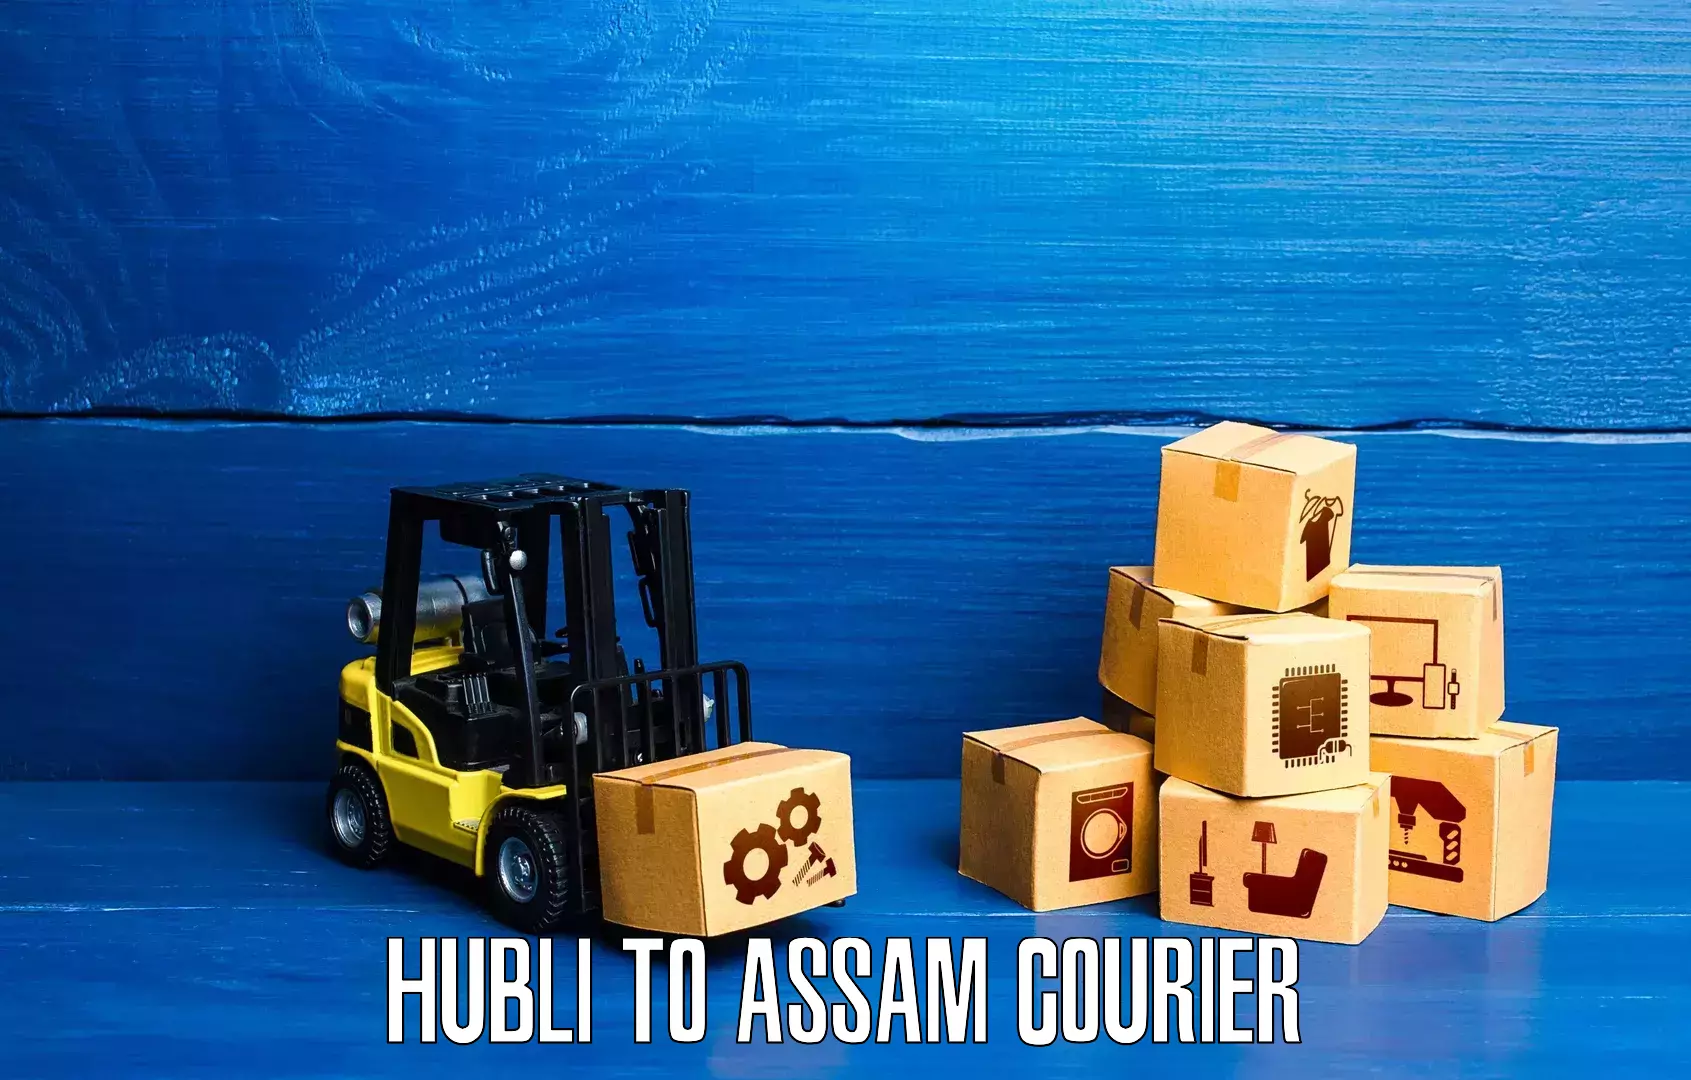 Courier service comparison Hubli to IIIT Guwahati